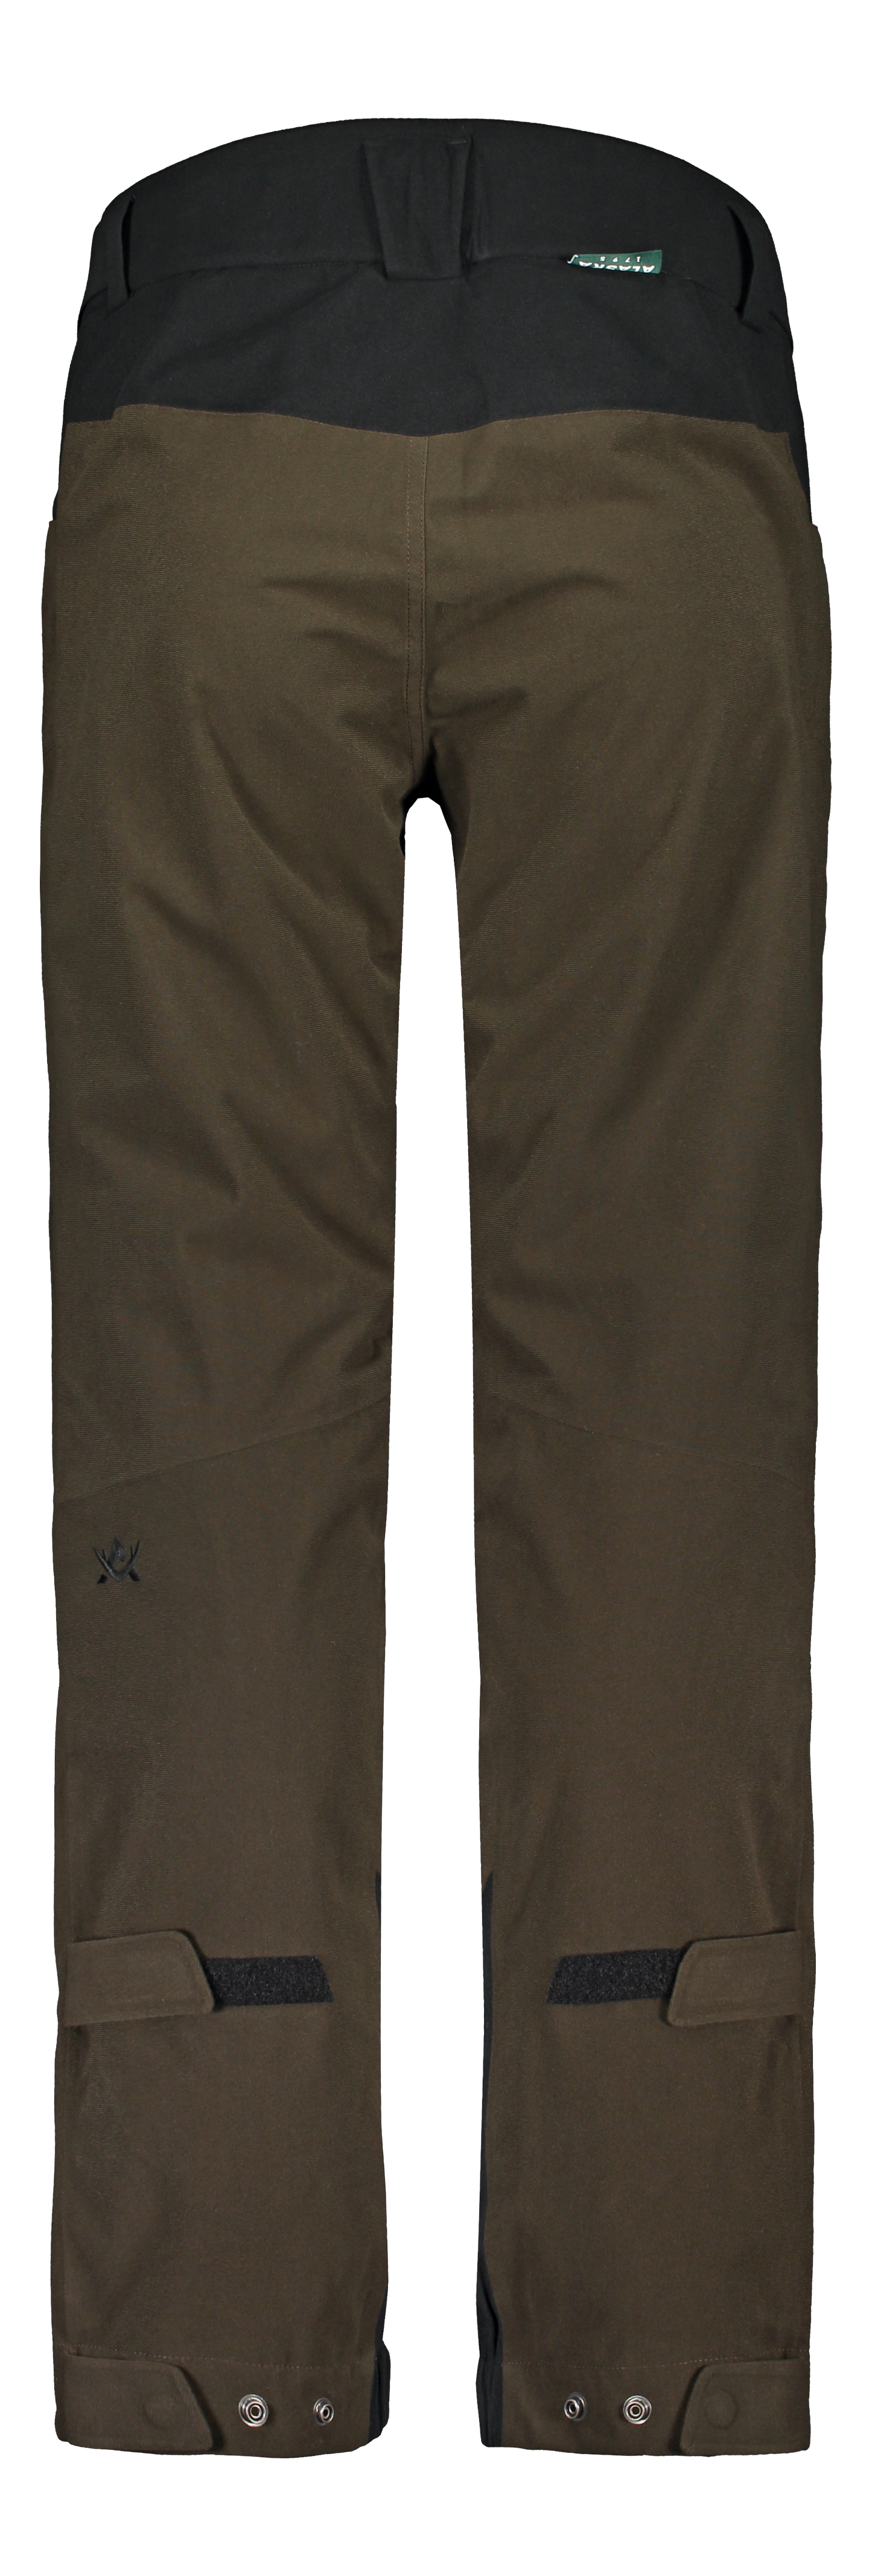 Apex PRO Men's Trousers, Brown/Black